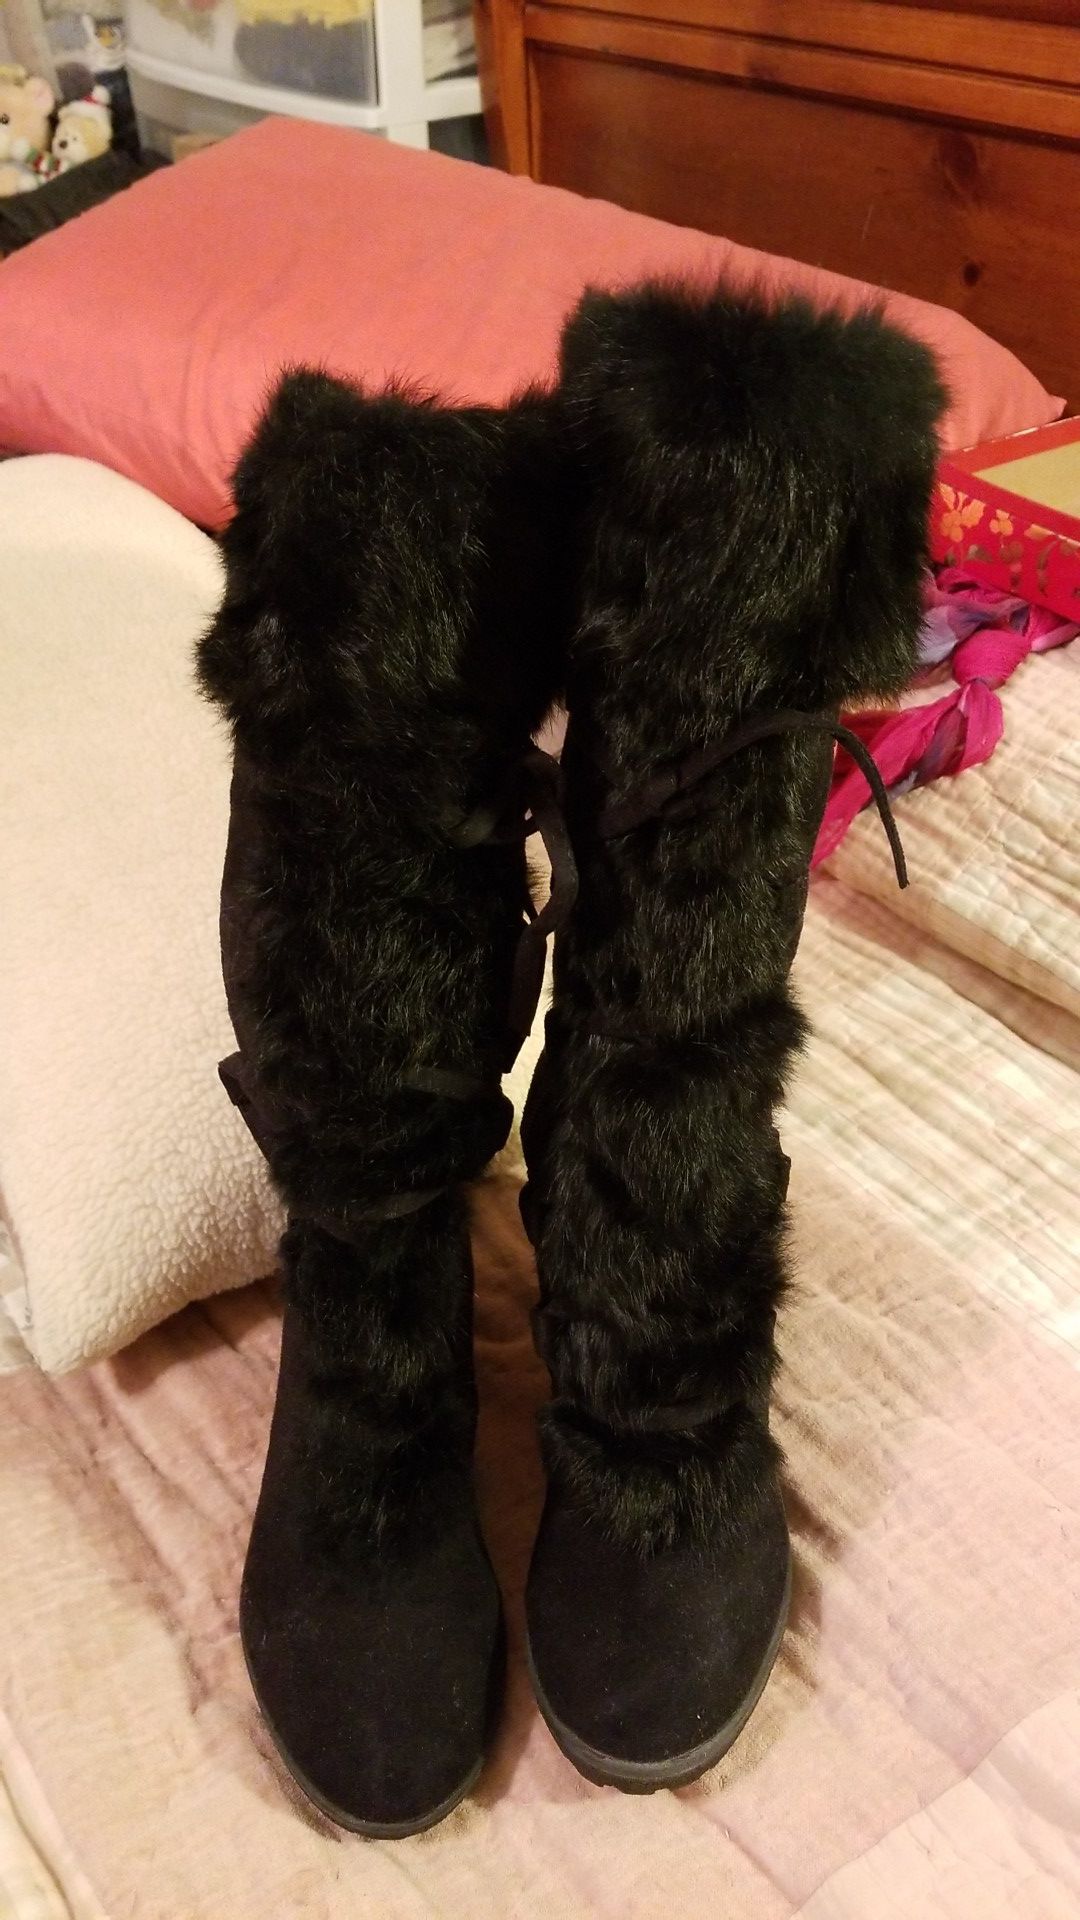 New black fur boots, size 9